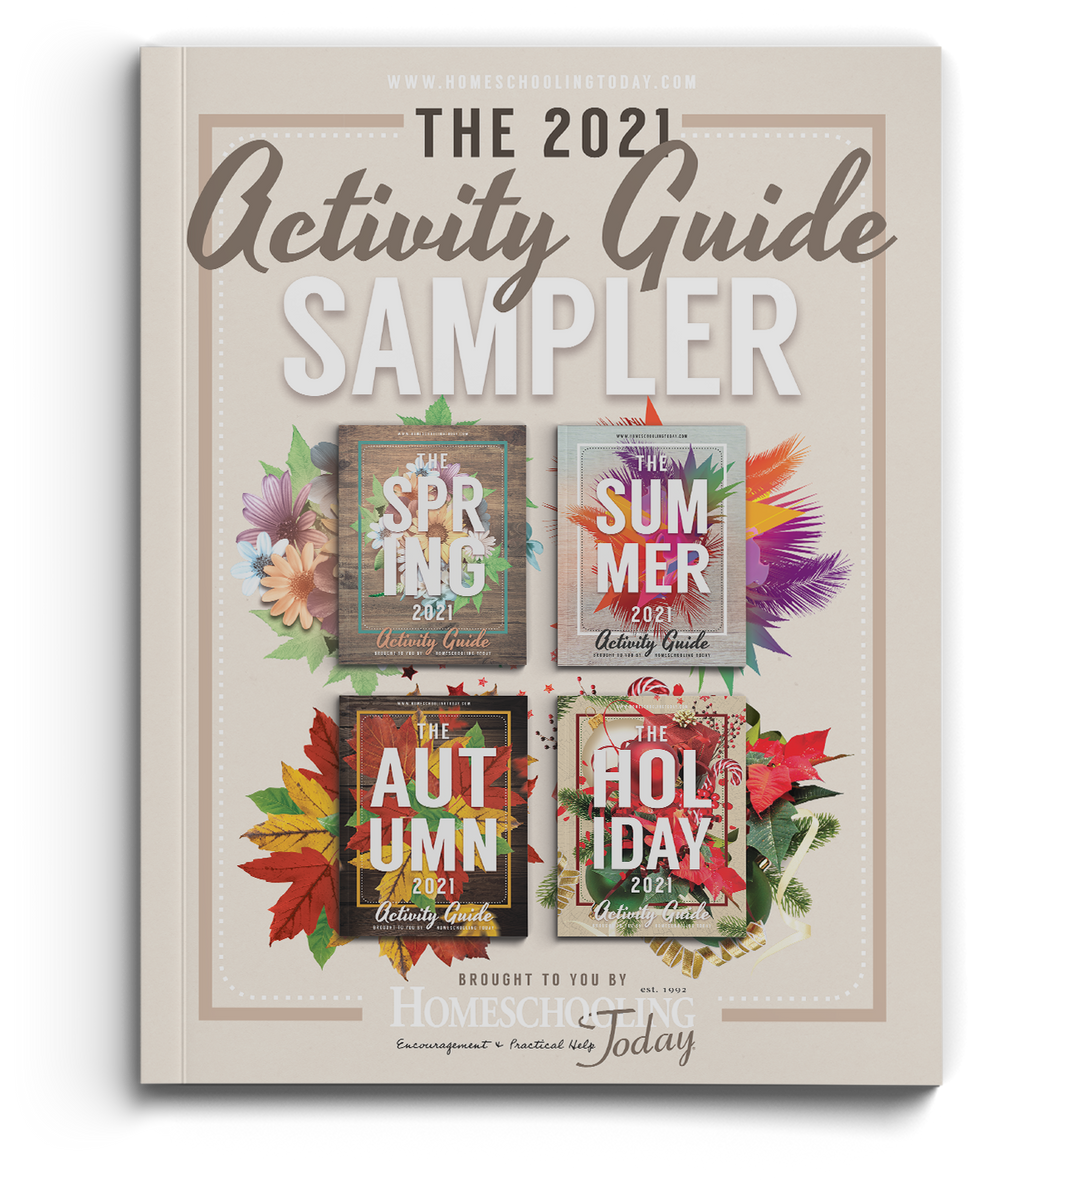 2021 Activity Guide Sampler